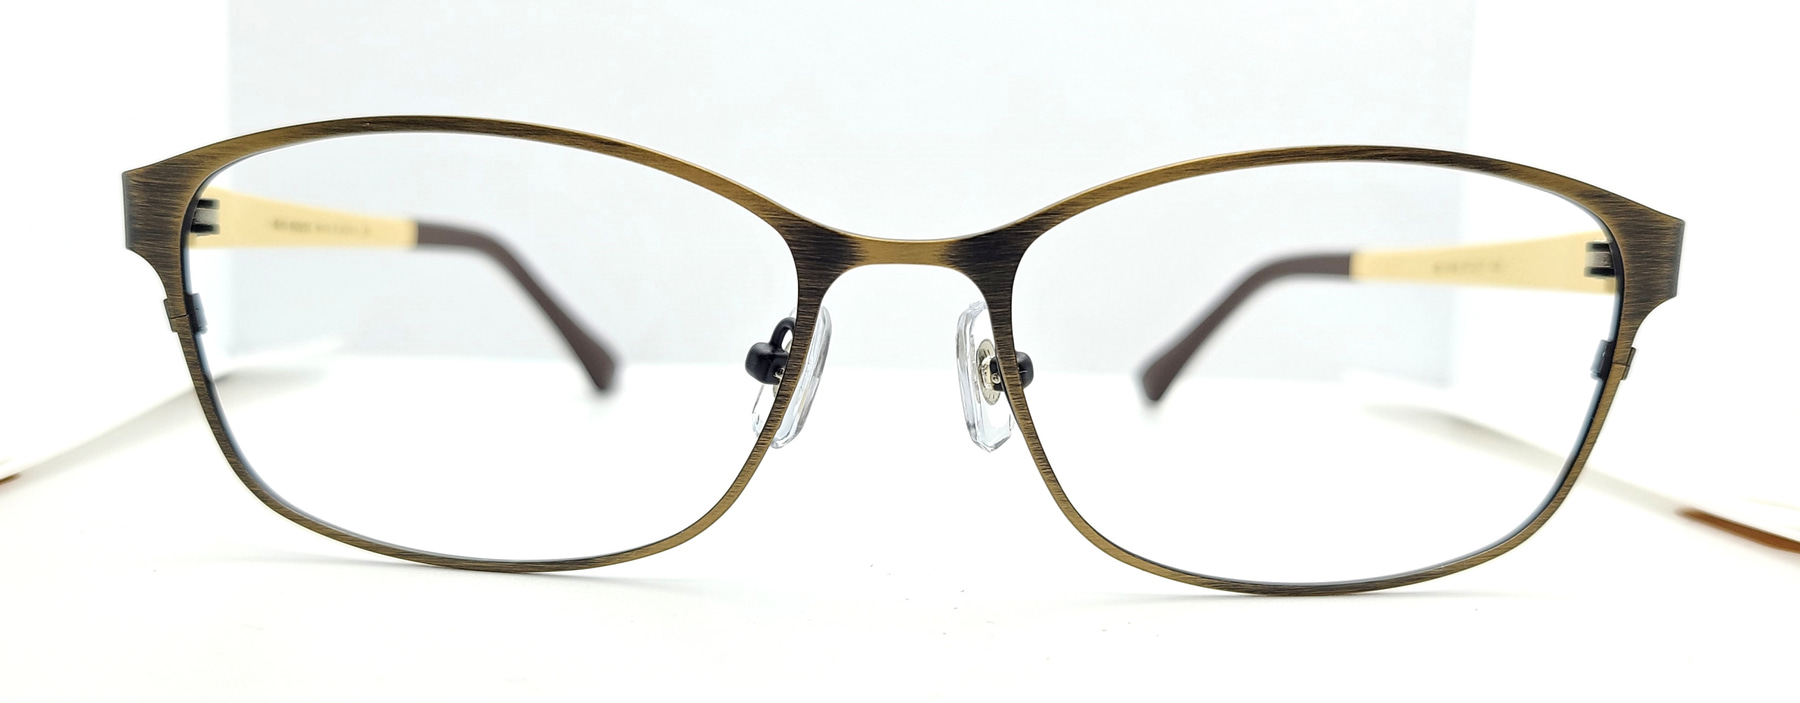 MINIHOUSE M-1308, Korean glasses, sunglasses, eyeglasses, glasses